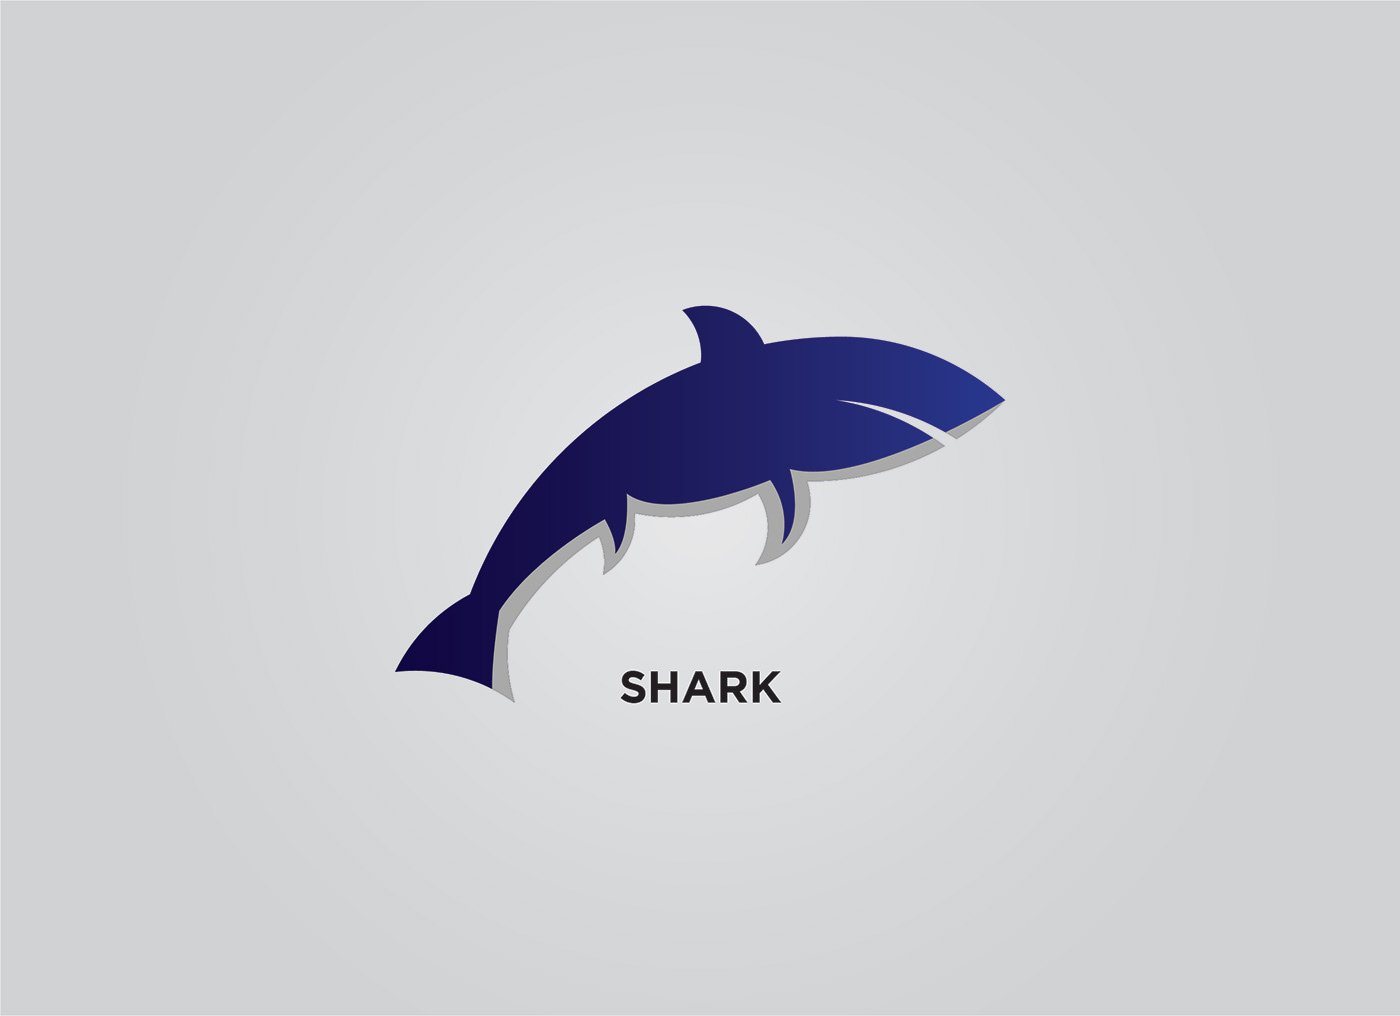 Logo Design logo brand Golden Ratio creative shark deign Illustrator